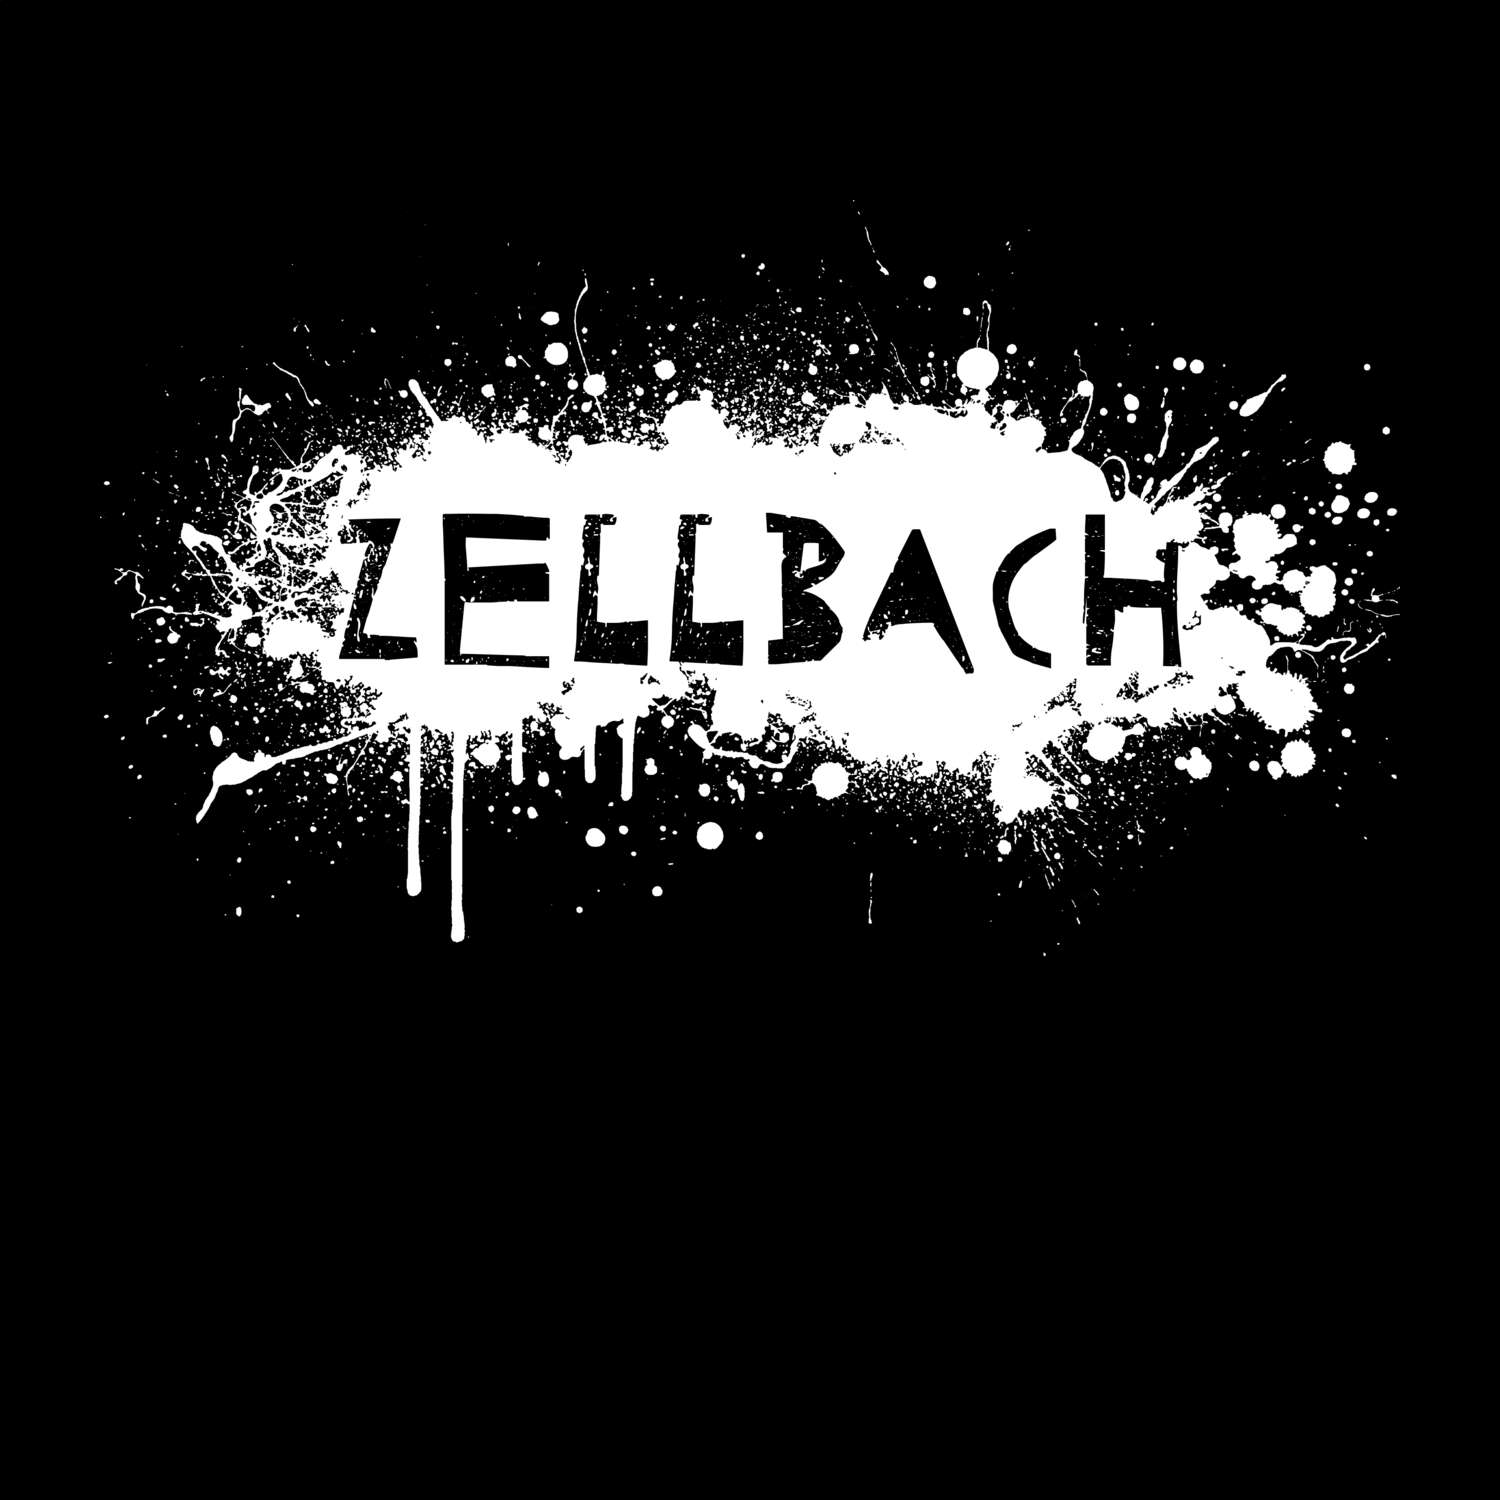 Zellbach T-Shirt »Paint Splash Punk«